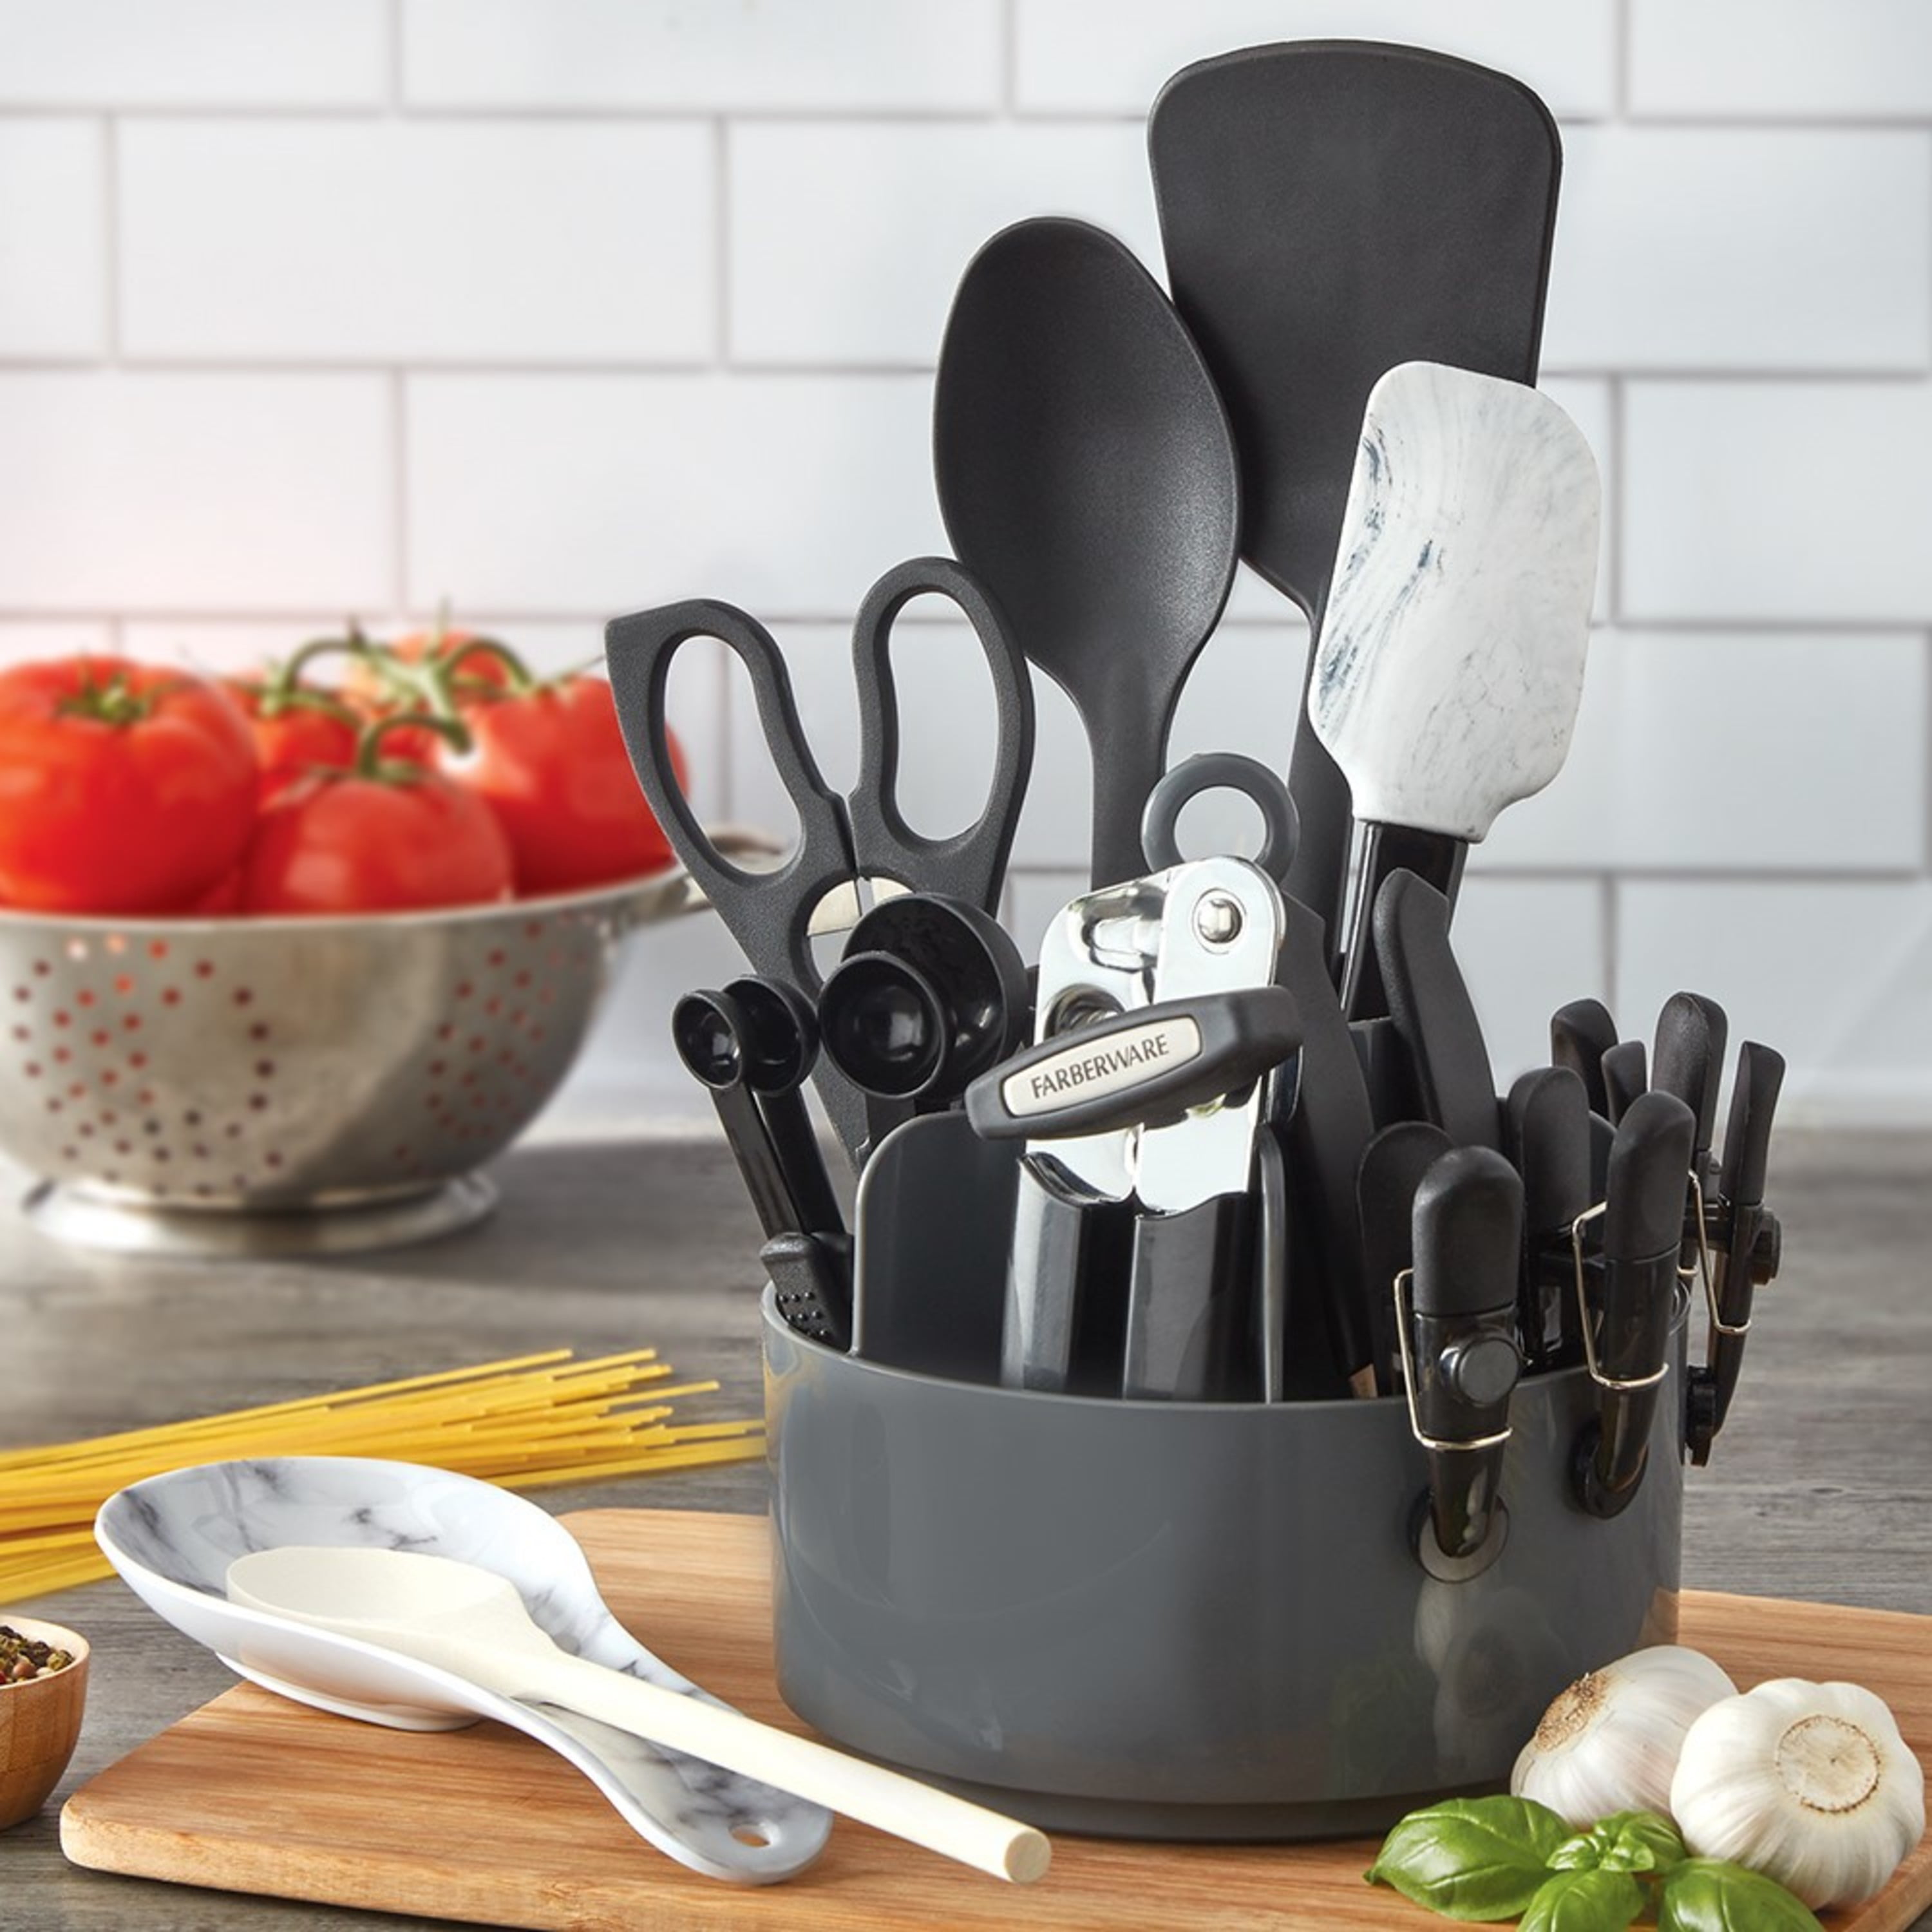 KitchenAid Universal Tool and Gadget Set, 6 Piece, Black